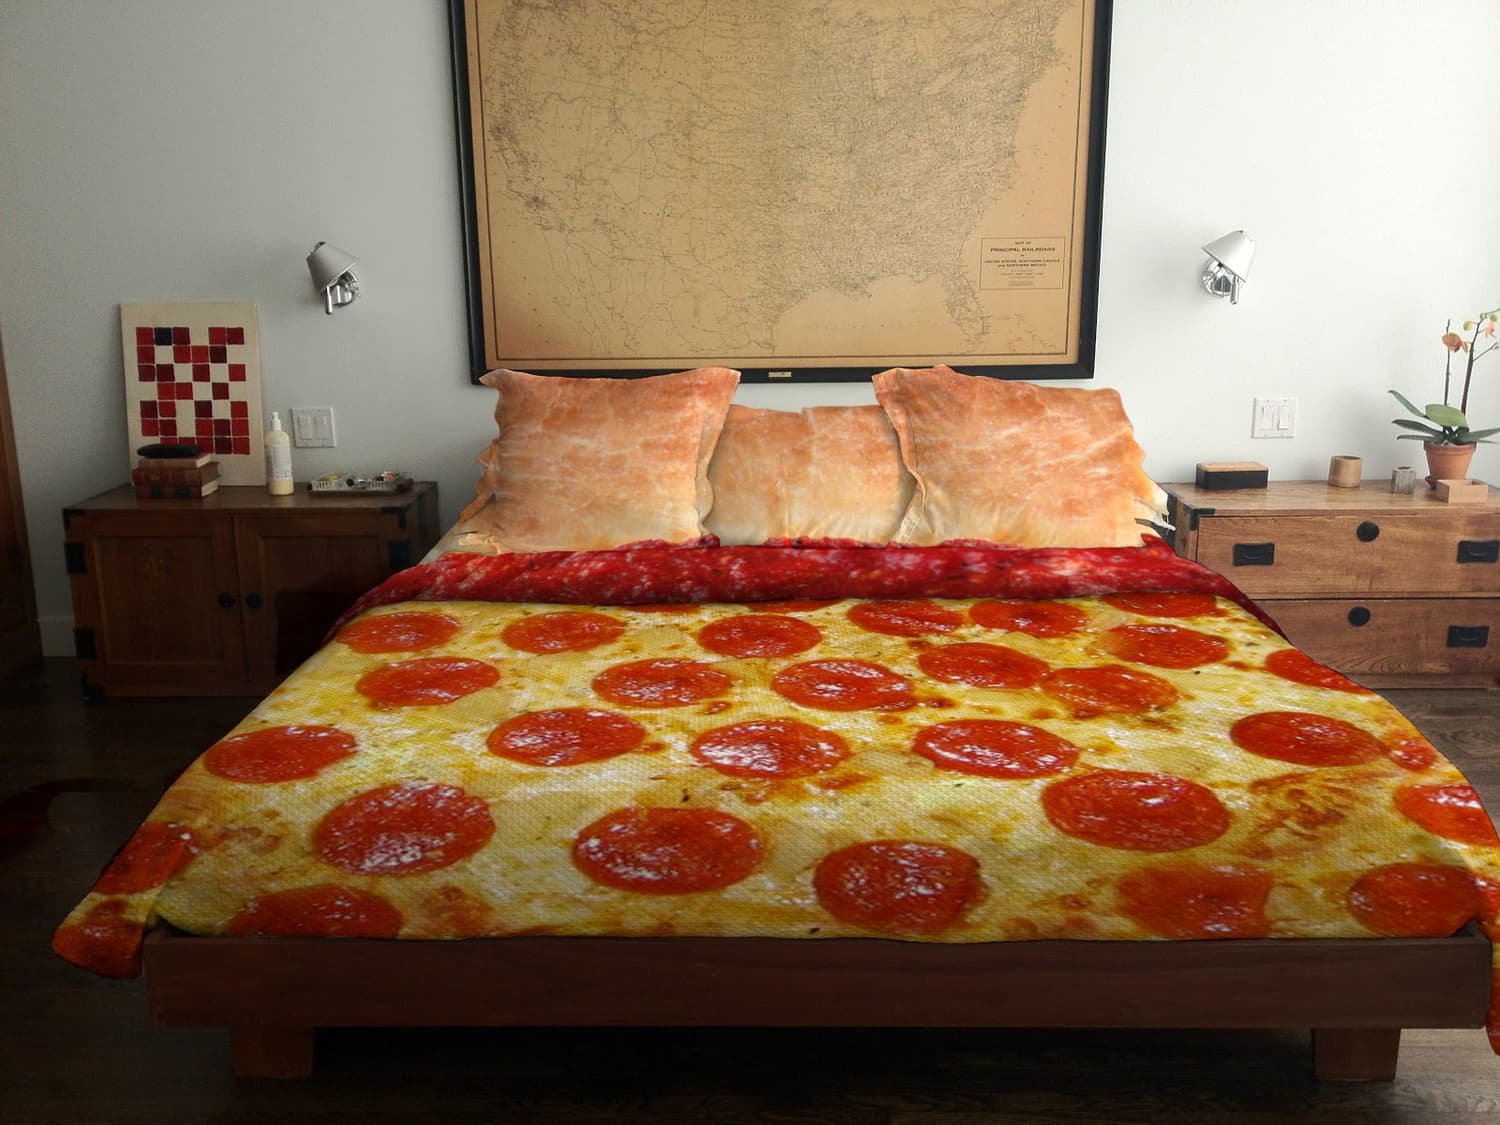 Пицца на кровати